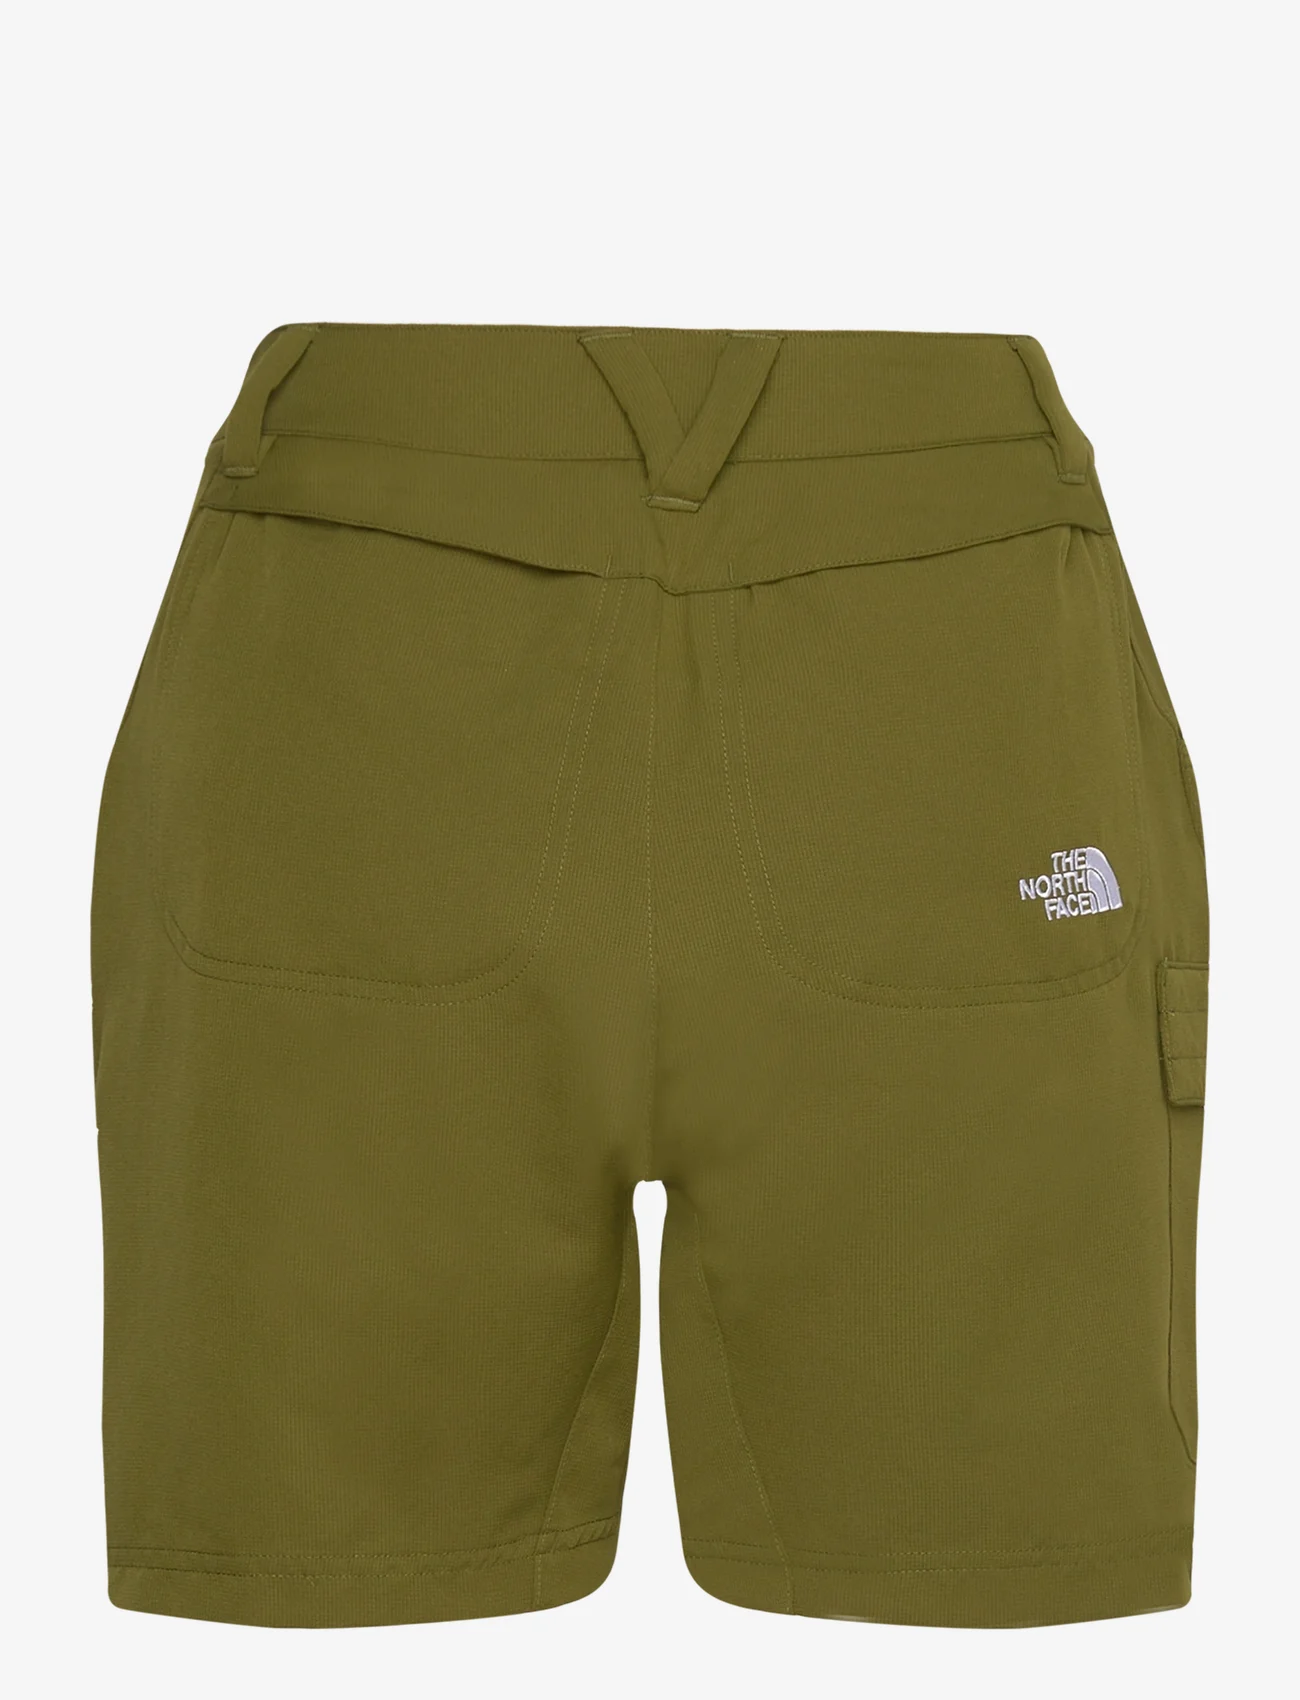 The North Face - W HORIZON SHORT - EU - training shorts - forest olive - 1